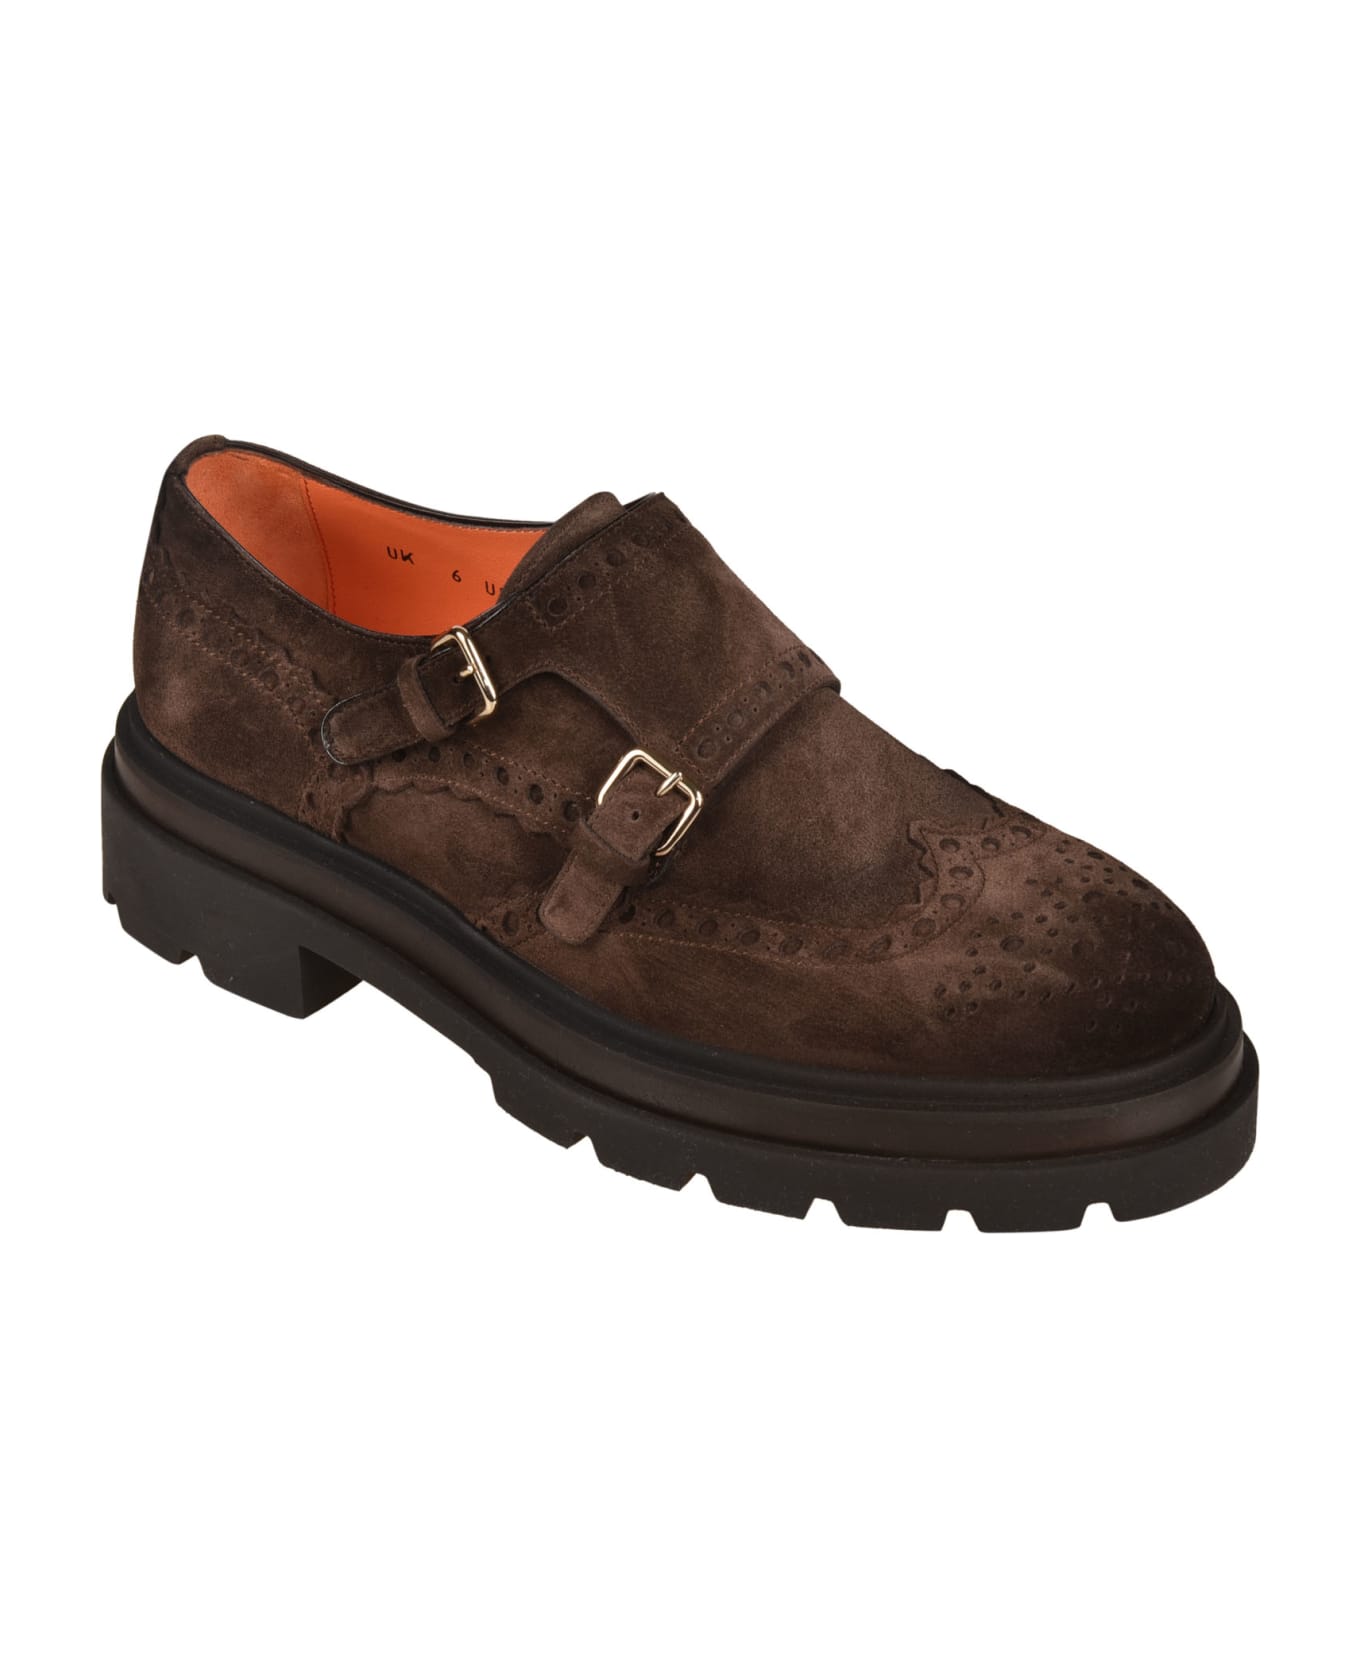 Santoni Baroque Monk Shoes - Brown